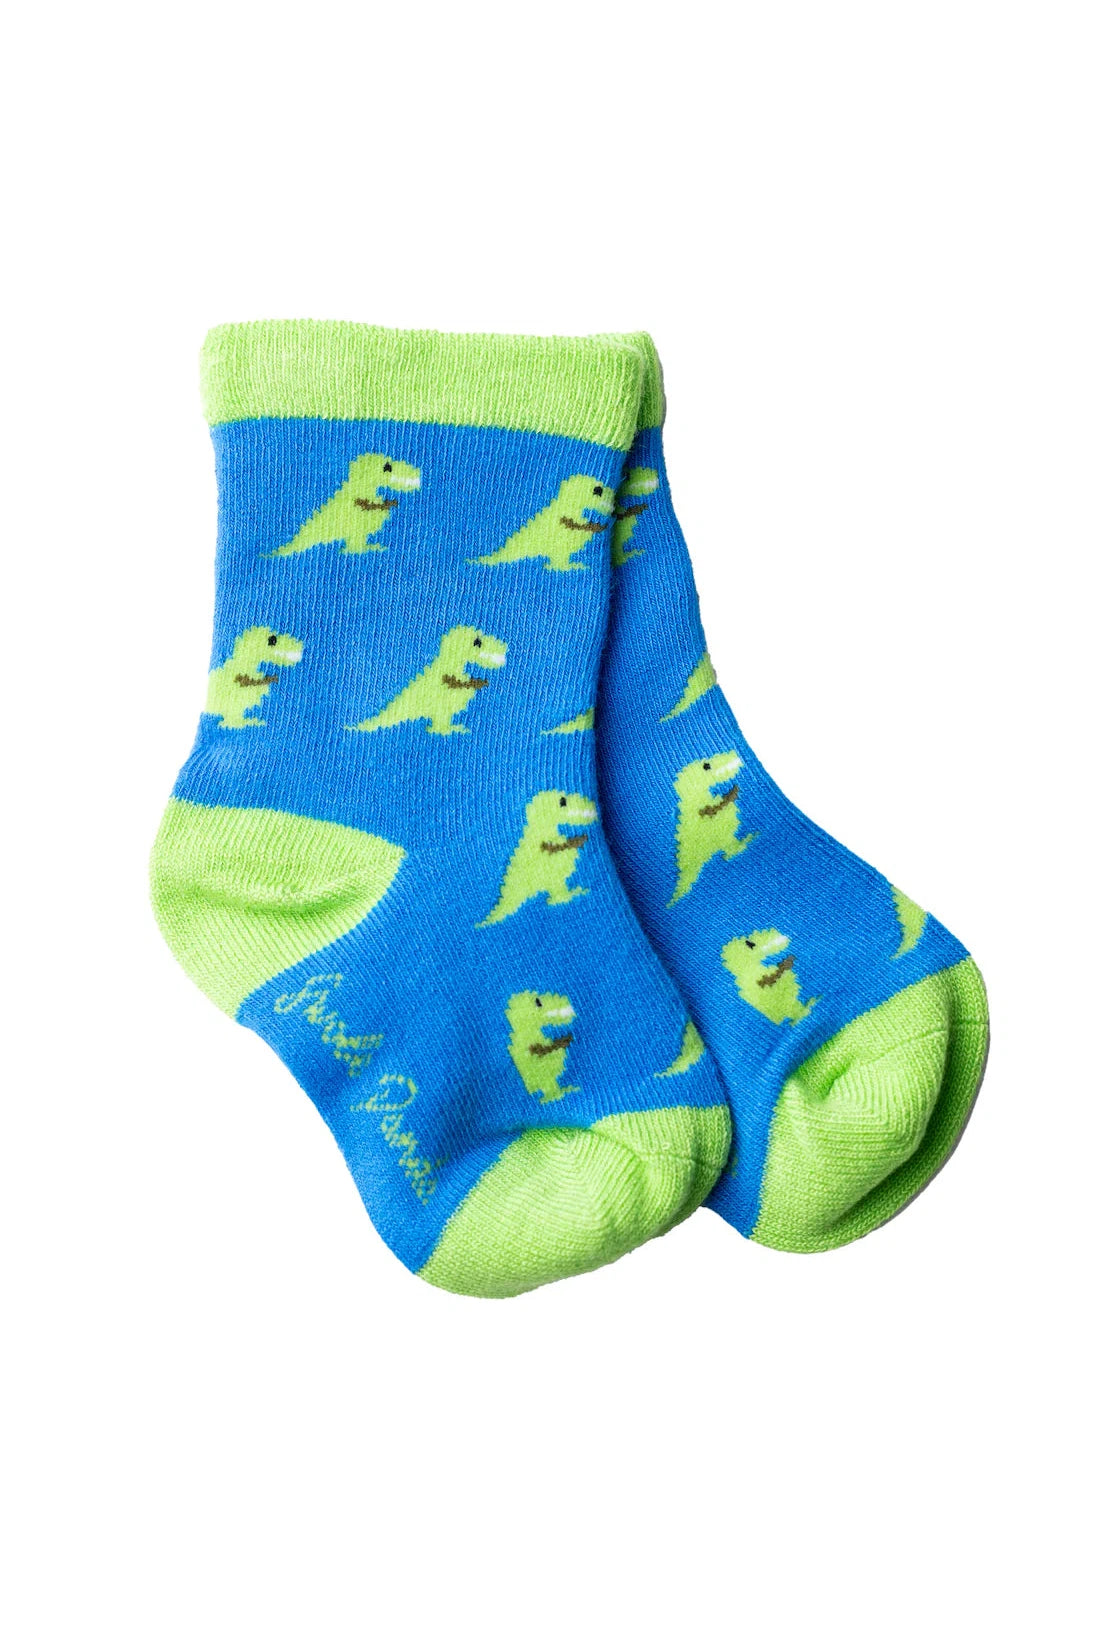 Swole Panda Kids T-Rex Bamboo Socks-Kids-Ohh! By Gum - Shop Sustainable